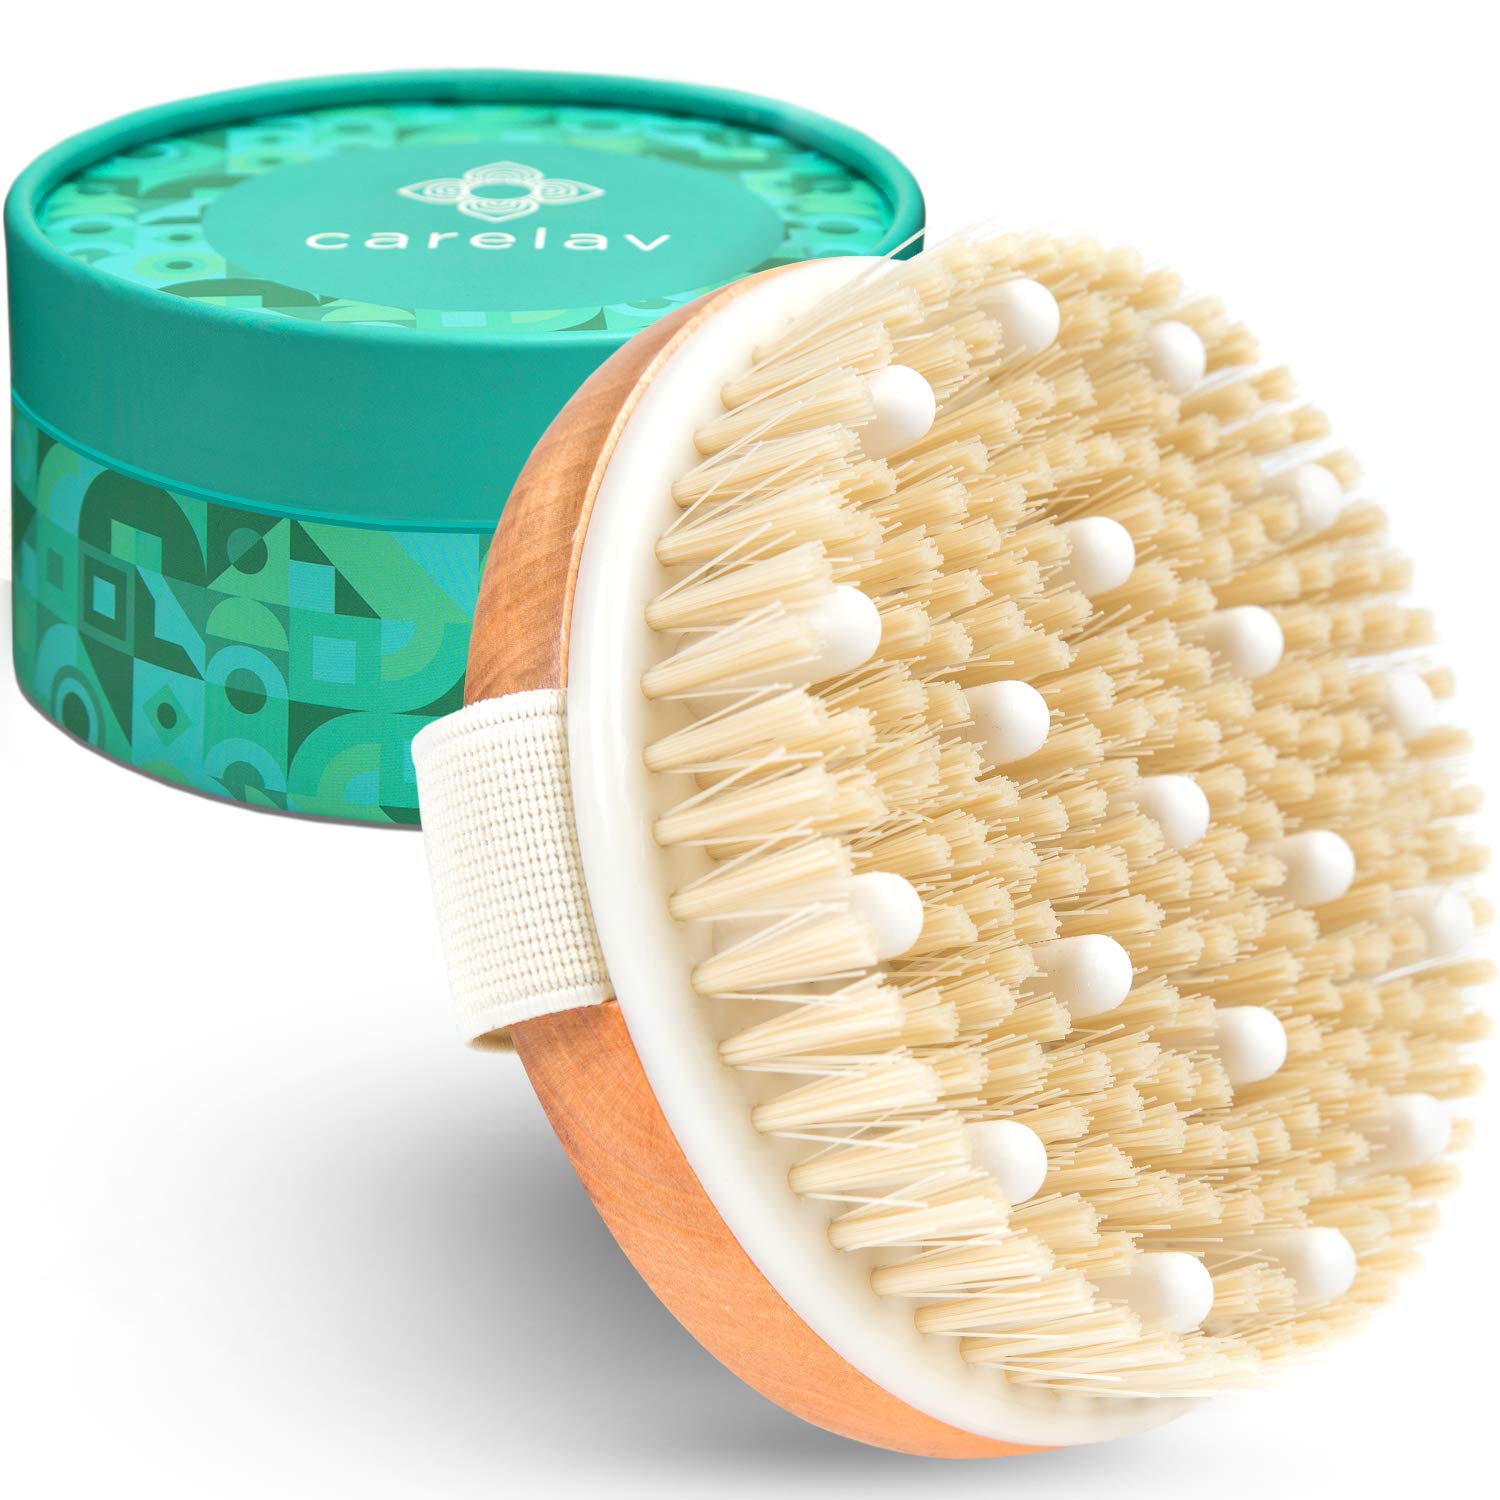 Detox Dry Body Brush, Eco Friendly Self Care Dry Skin Brushing